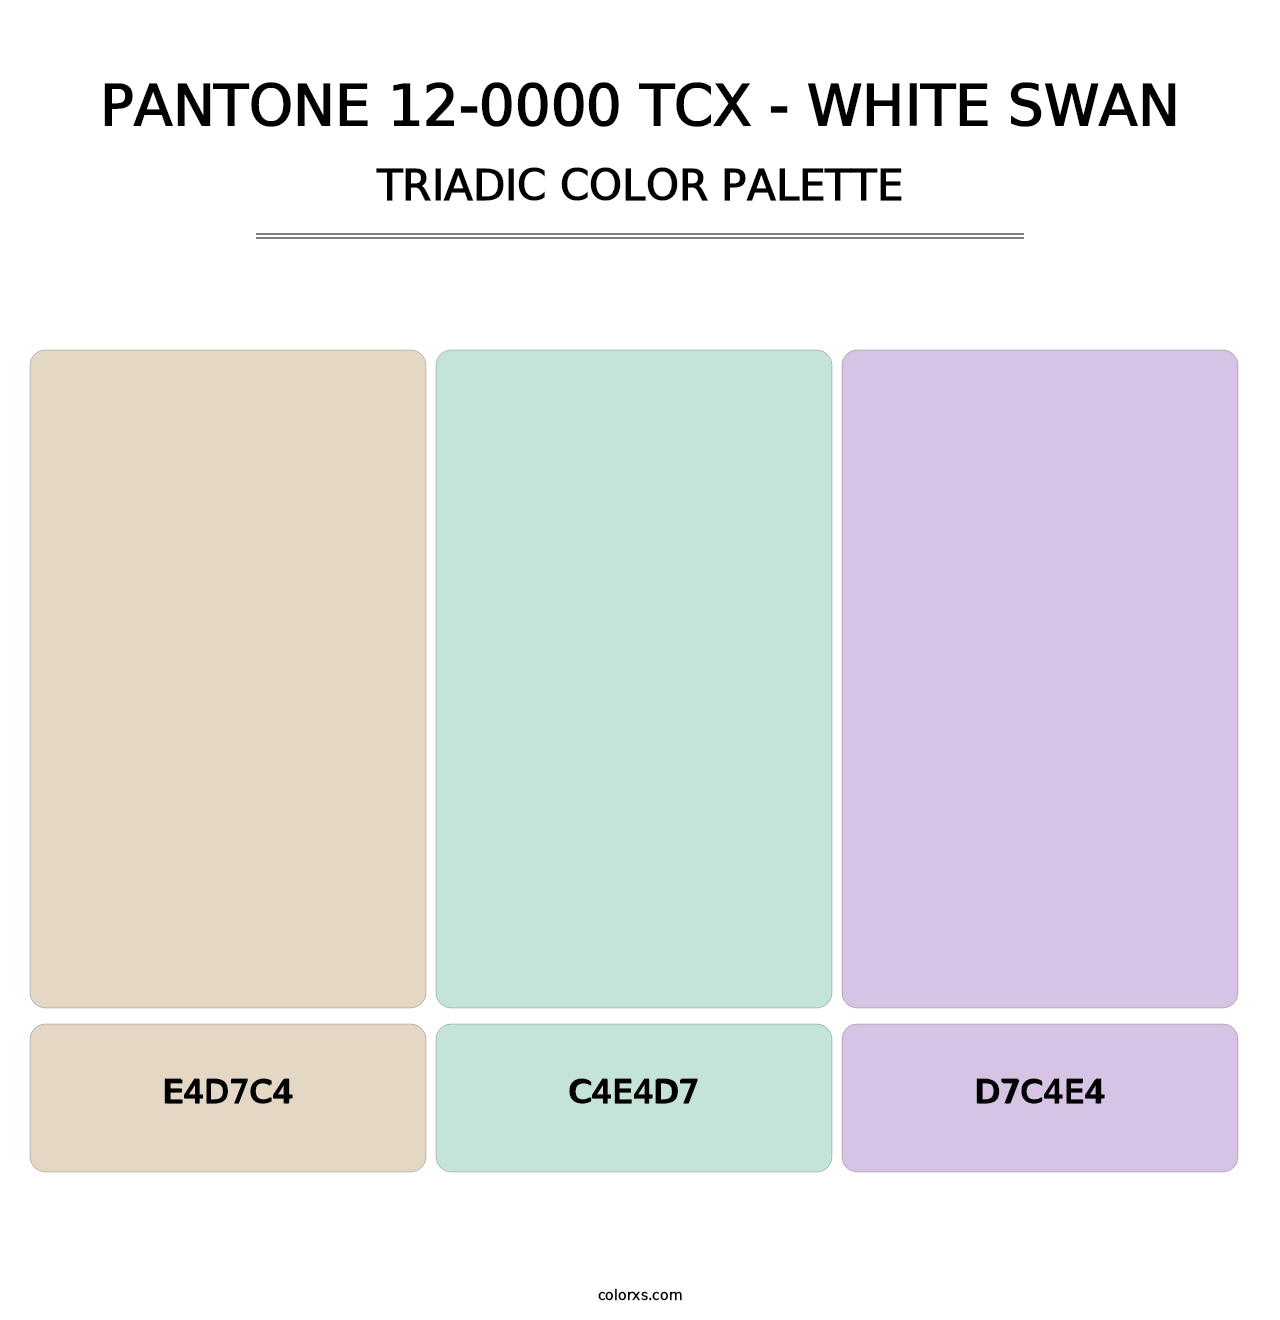 PANTONE 12-0000 TCX - White Swan - Triadic Color Palette